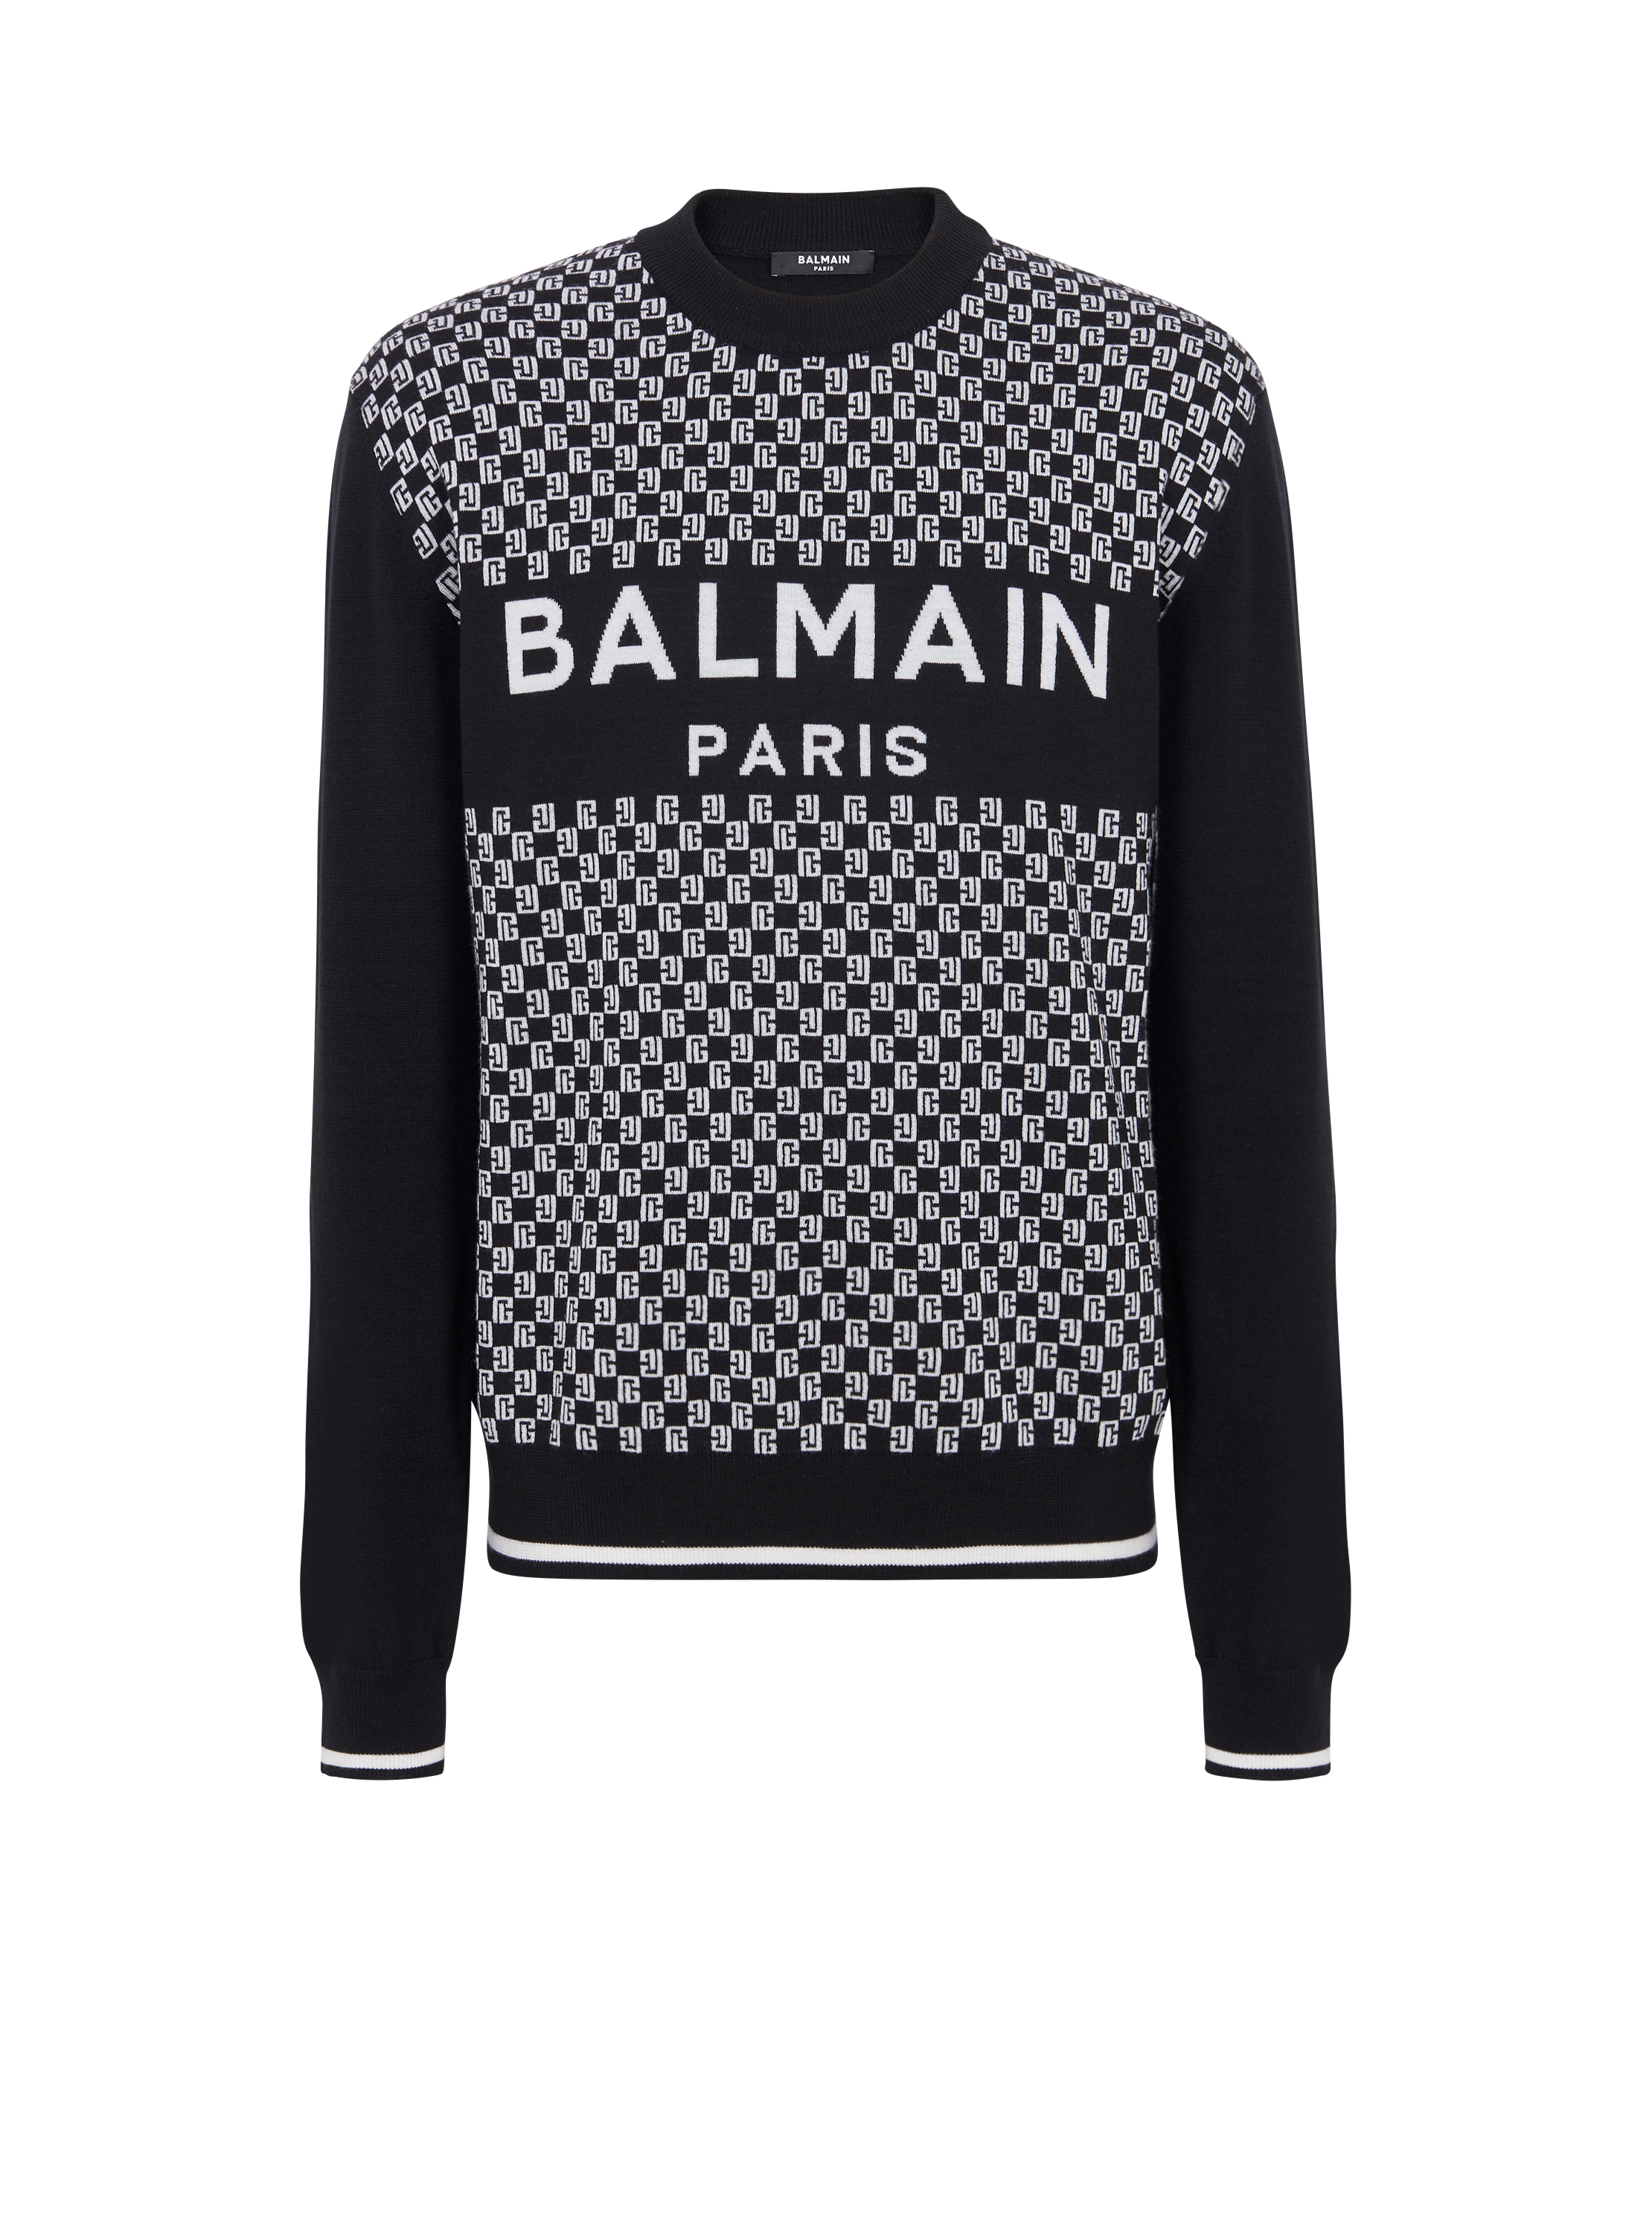 Balmain Pullover mit Mini-Monogramm, schwarz, hi-res